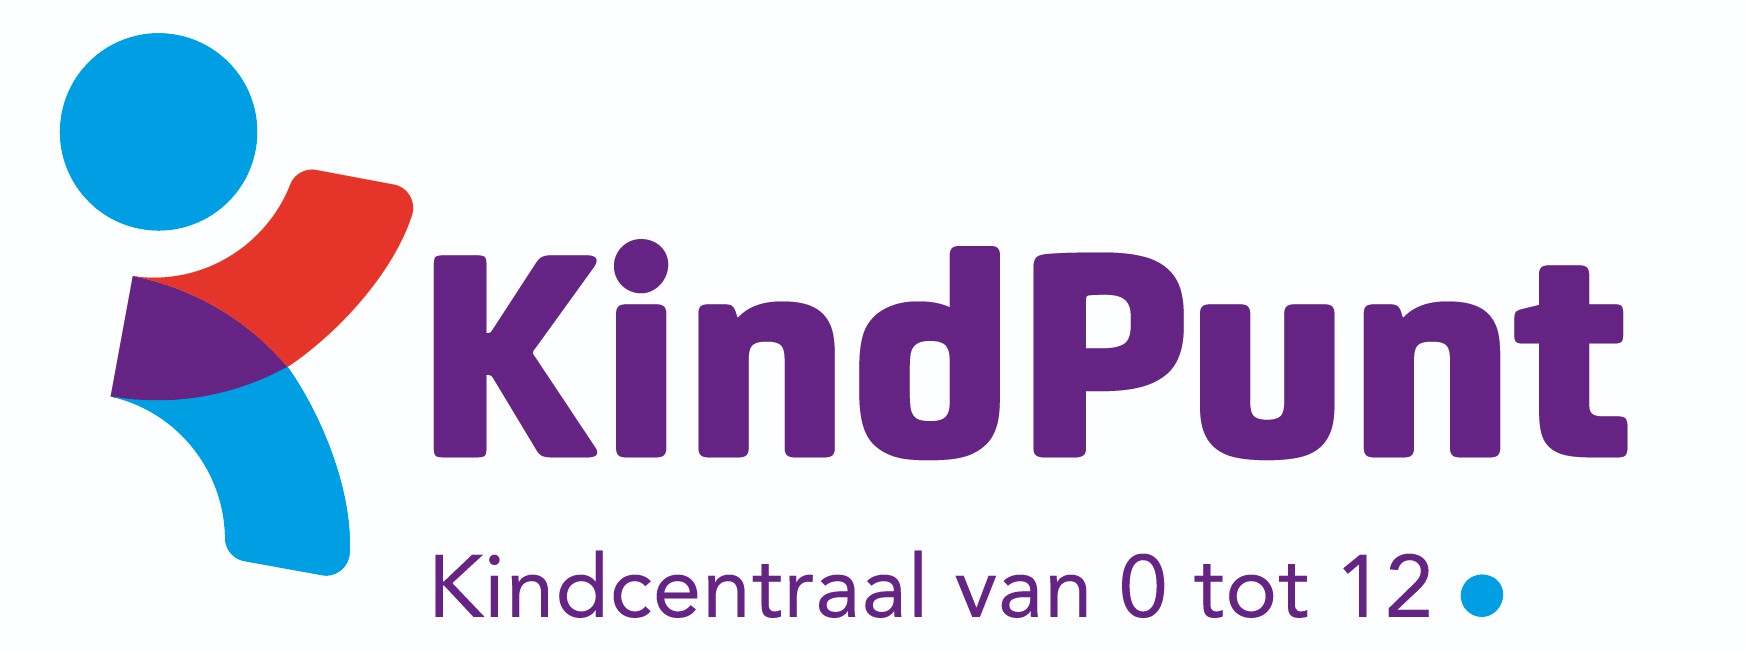 Stichting KindPunt.